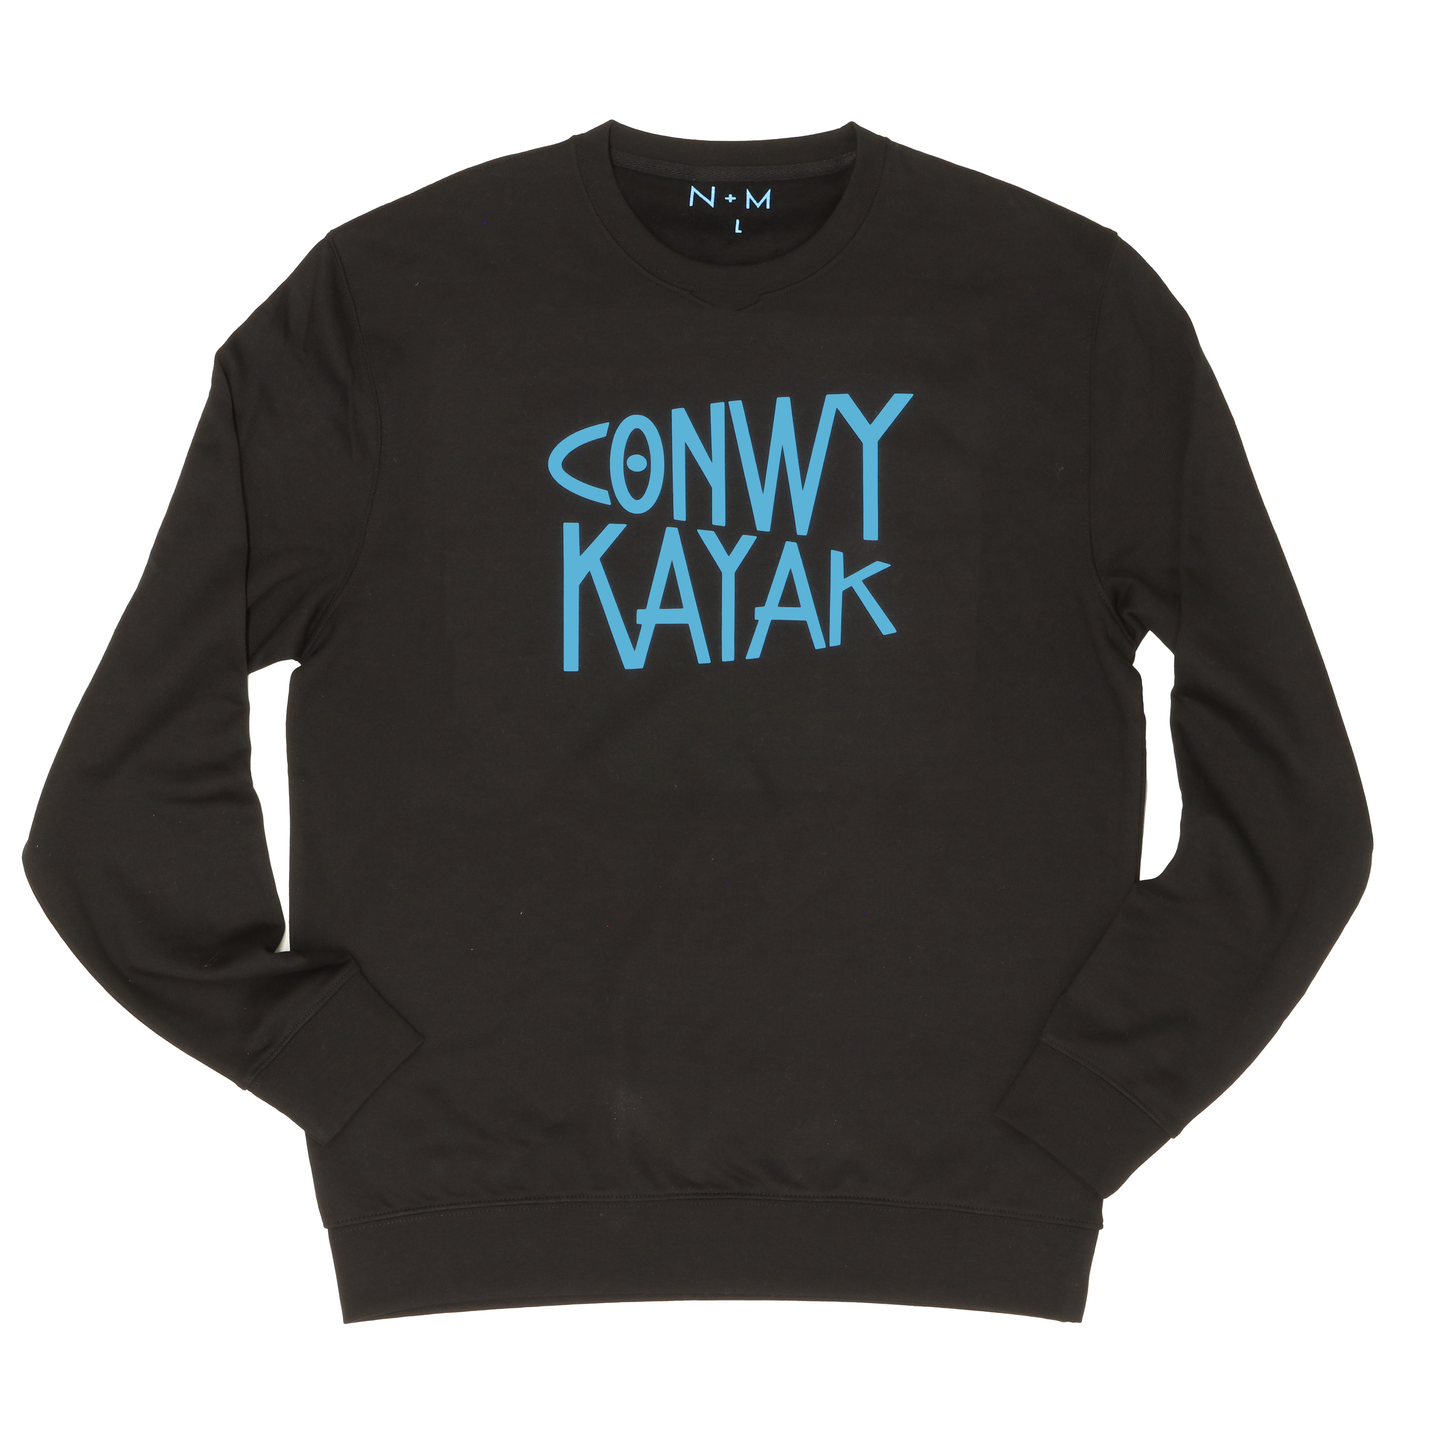 Conwy Kayak - Black Crewneck Sweater - 0